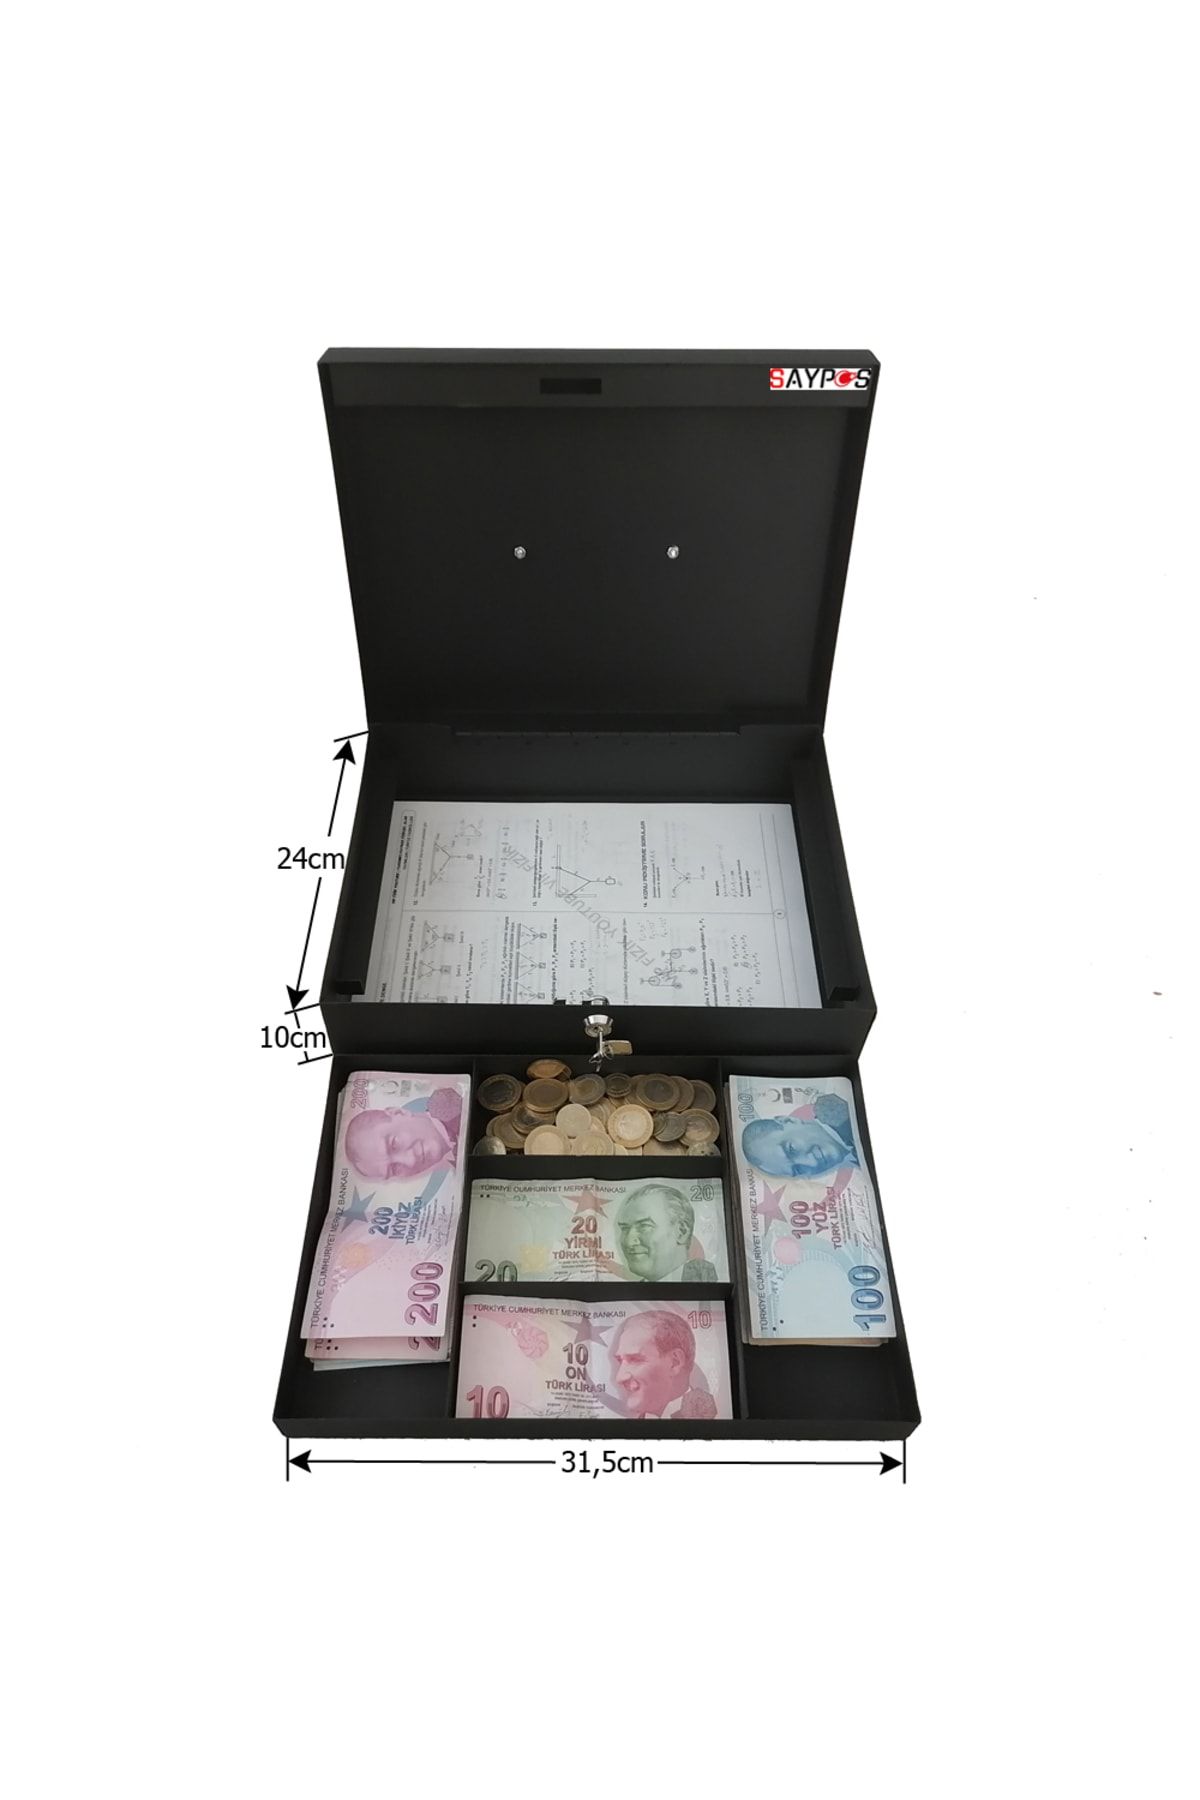 SAYPOS Büyük Boy Metal Para Kutusu 2 Banknot 3 Madeni Para Gözlü Taşınabilir Para Kasası 31,5x24x10cm